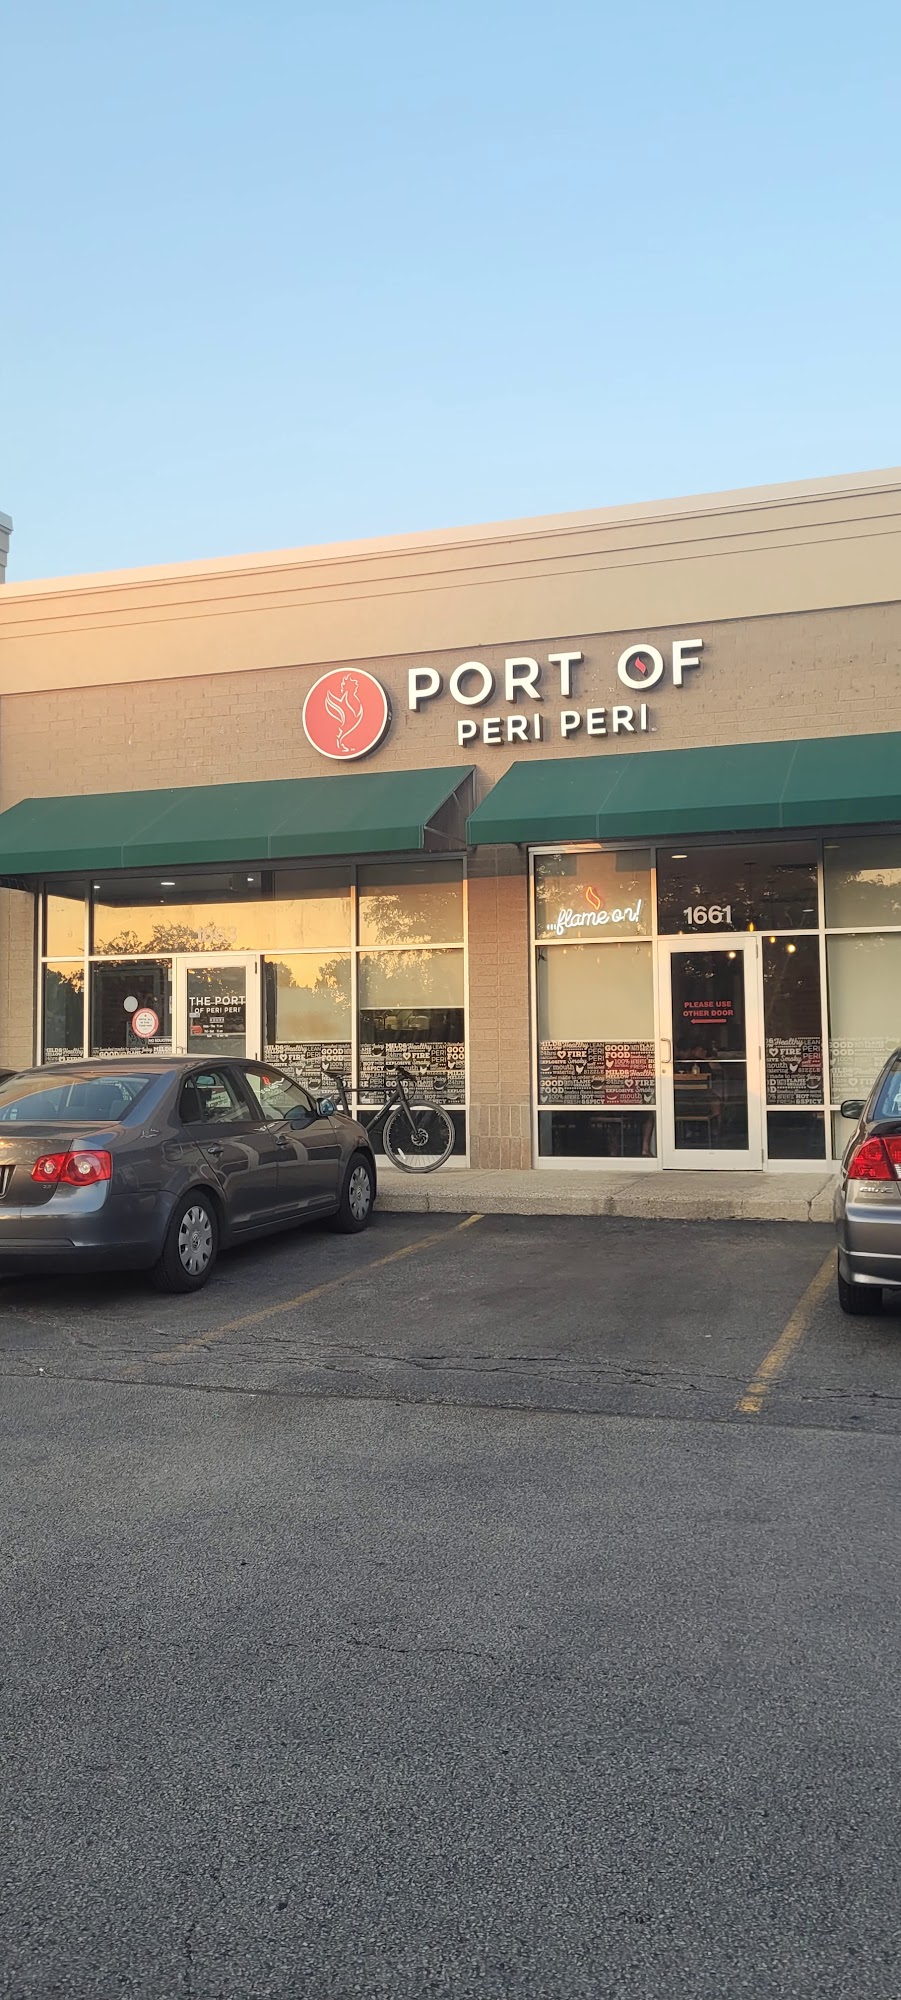 The Port of Peri Peri